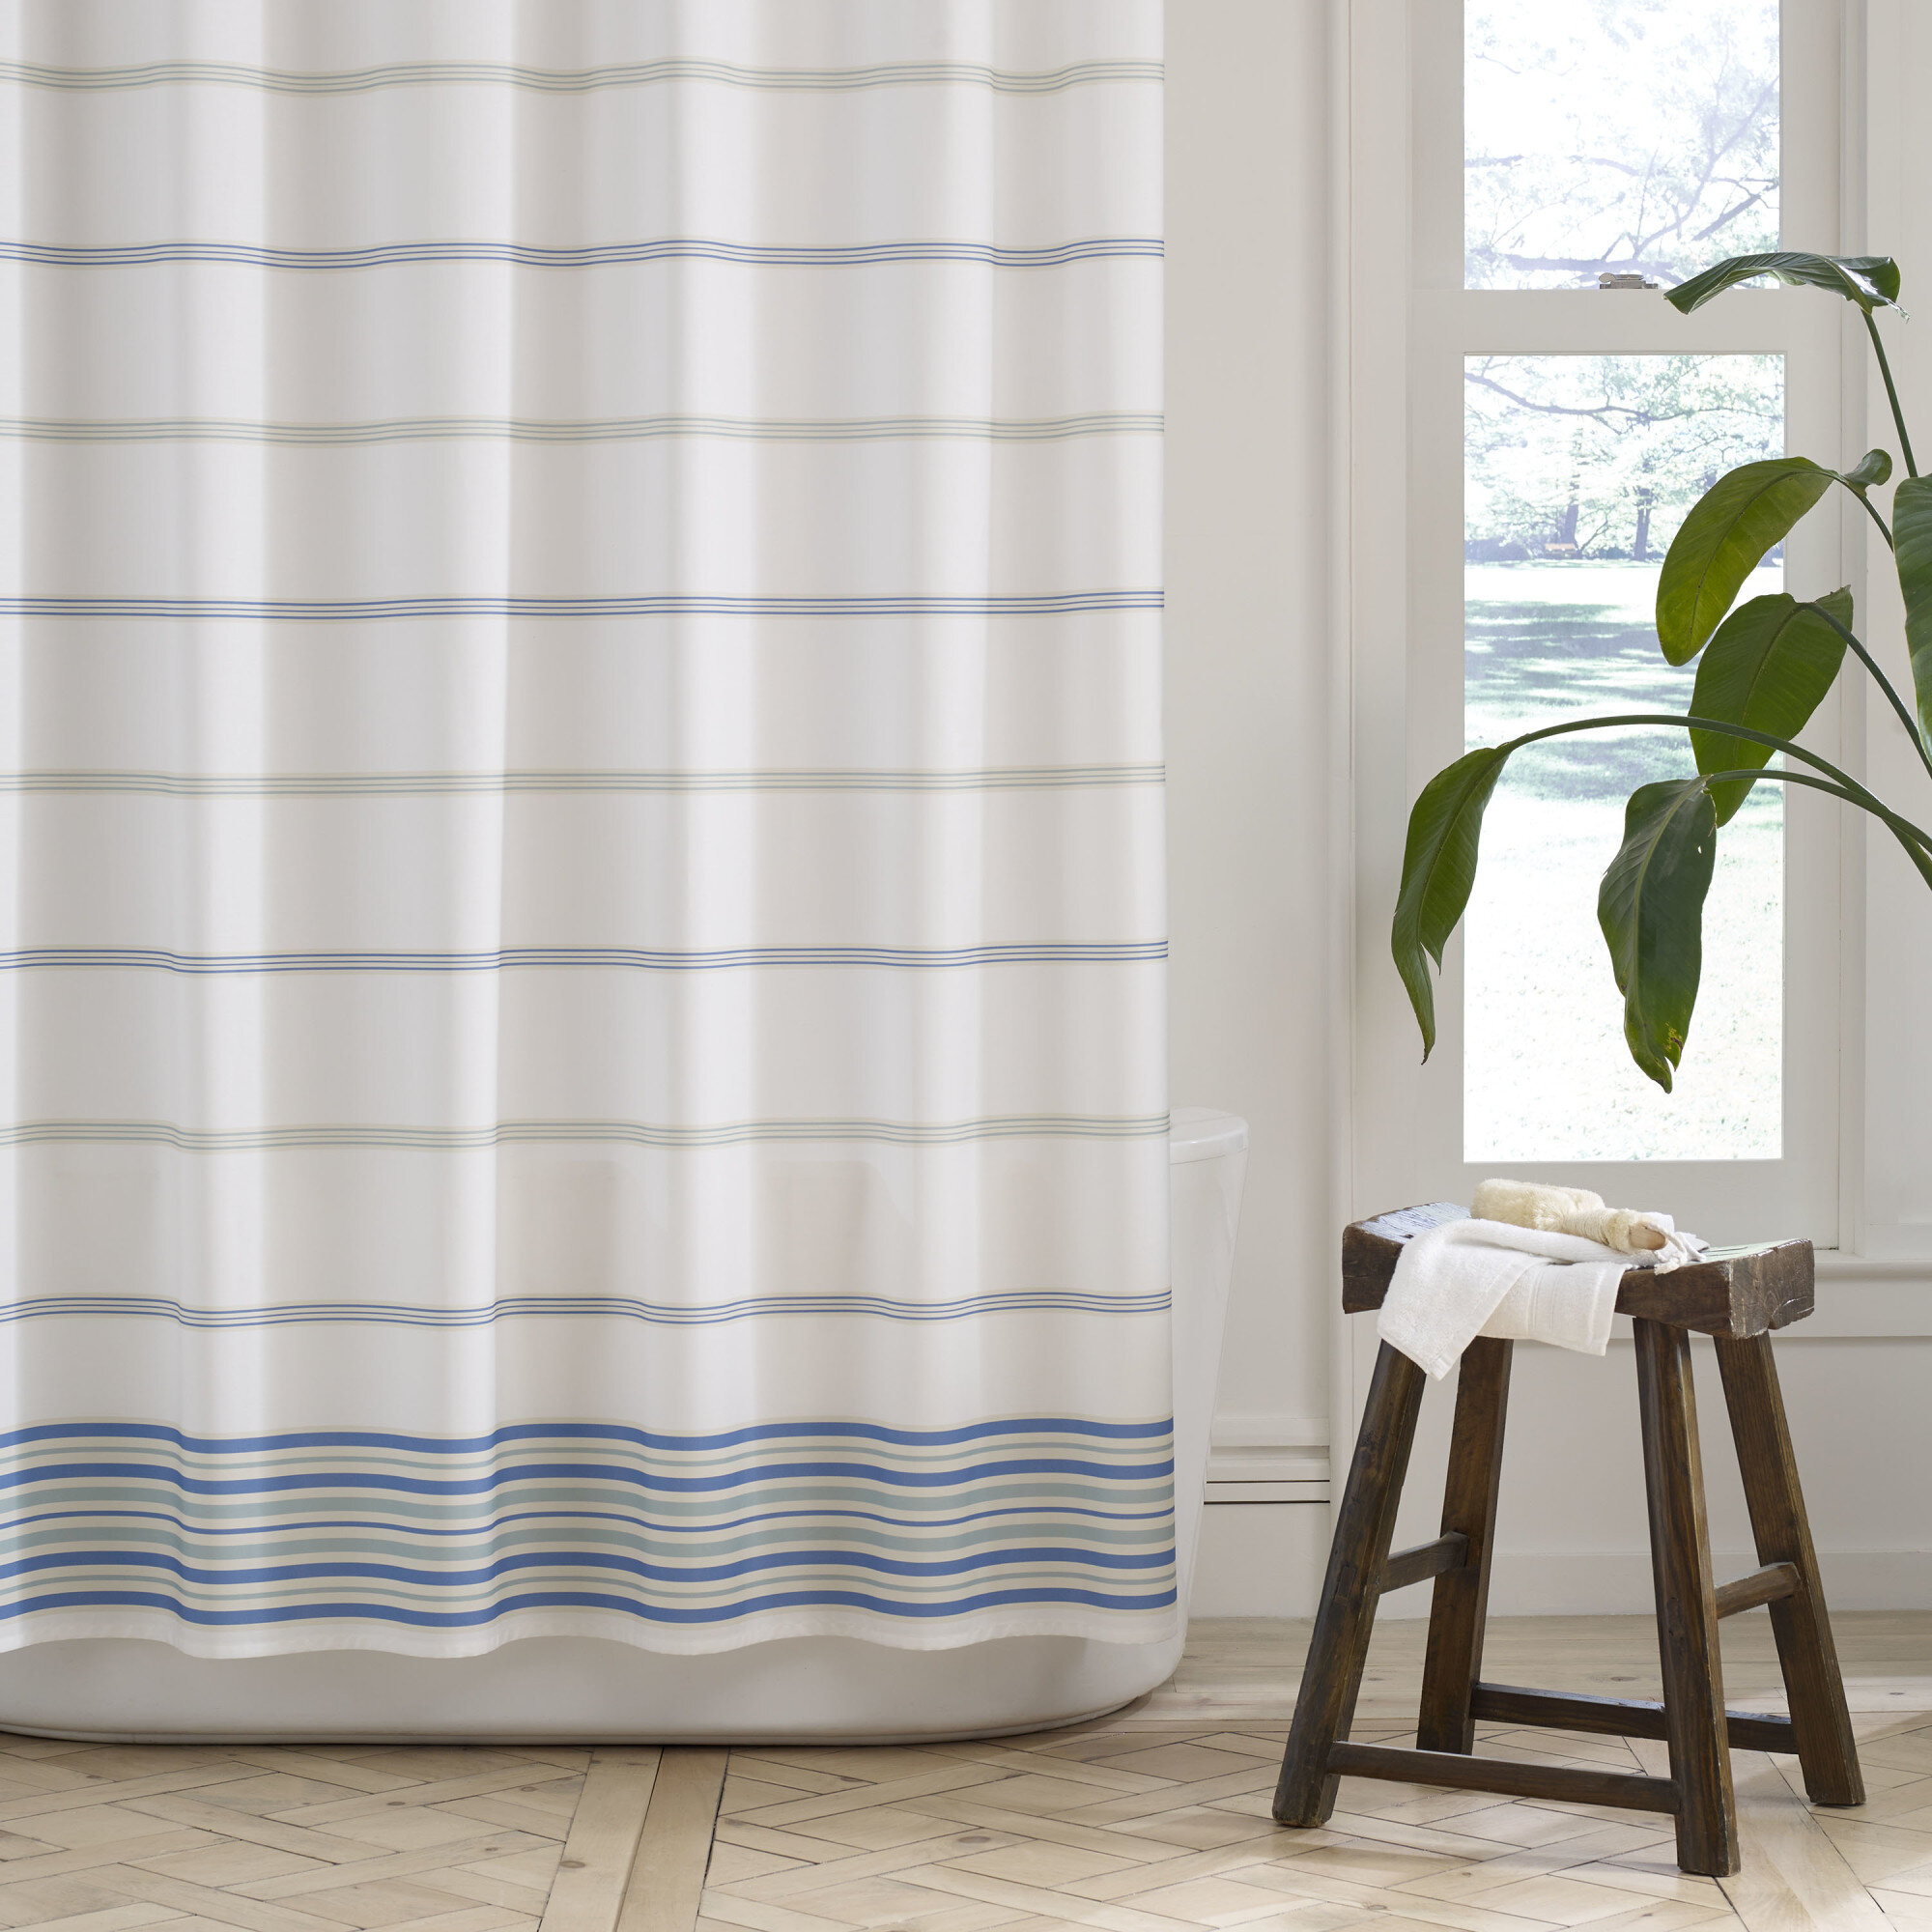 Details about   Croydex Plum Pinstripe Textile Shower Curtain with Hygiene 'N' Clean 